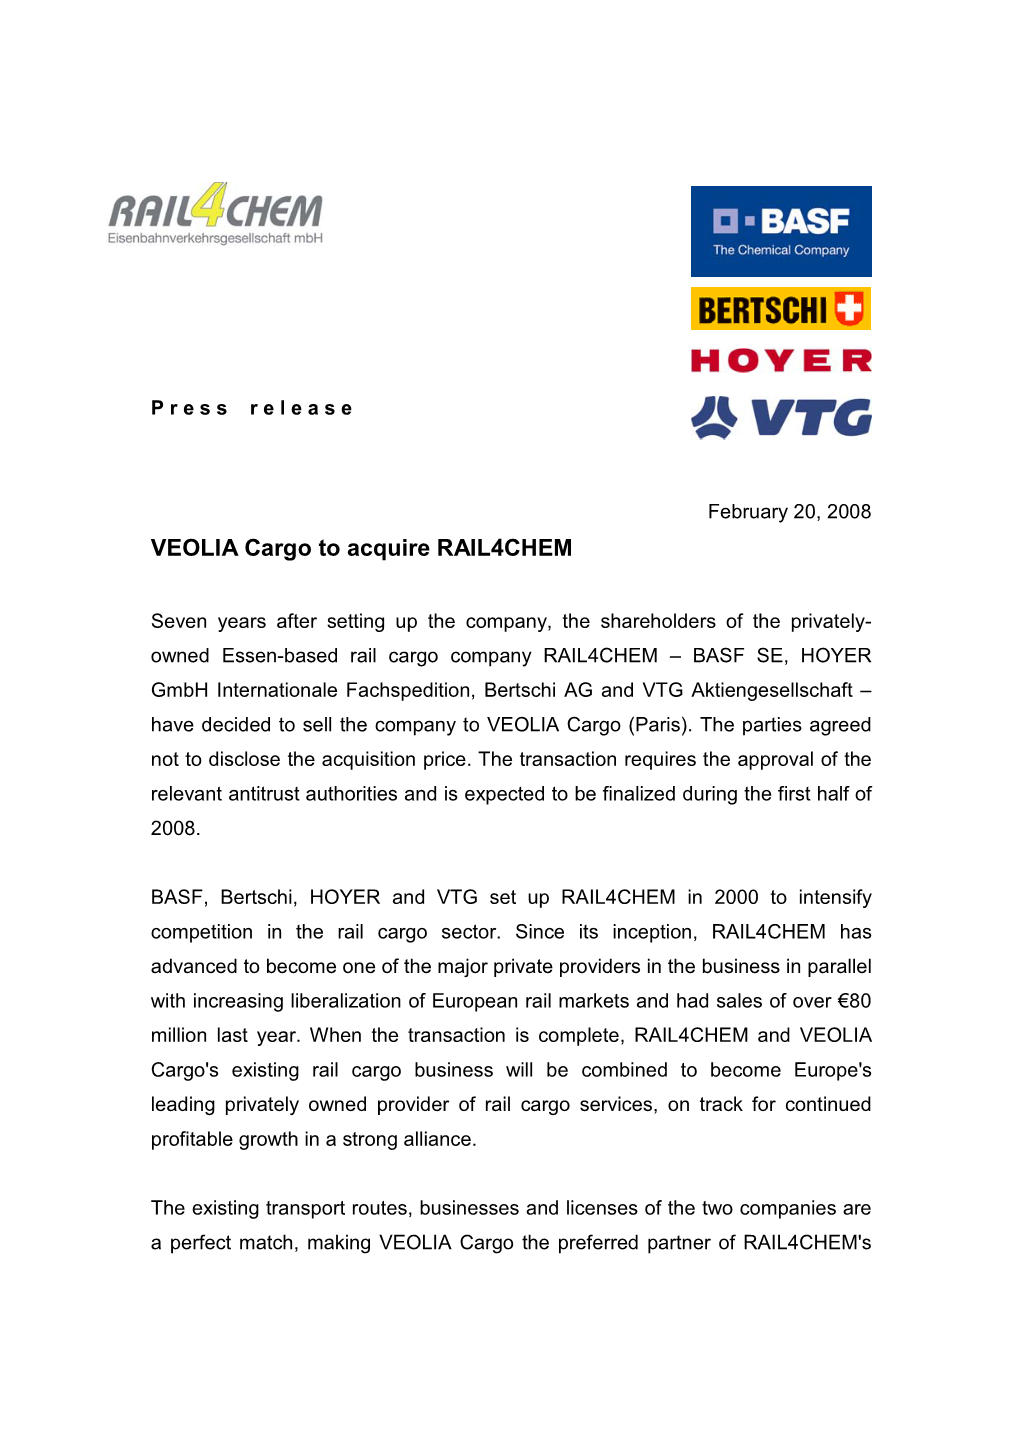 VEOLIA Cargo to Acquire RAIL4CHEM